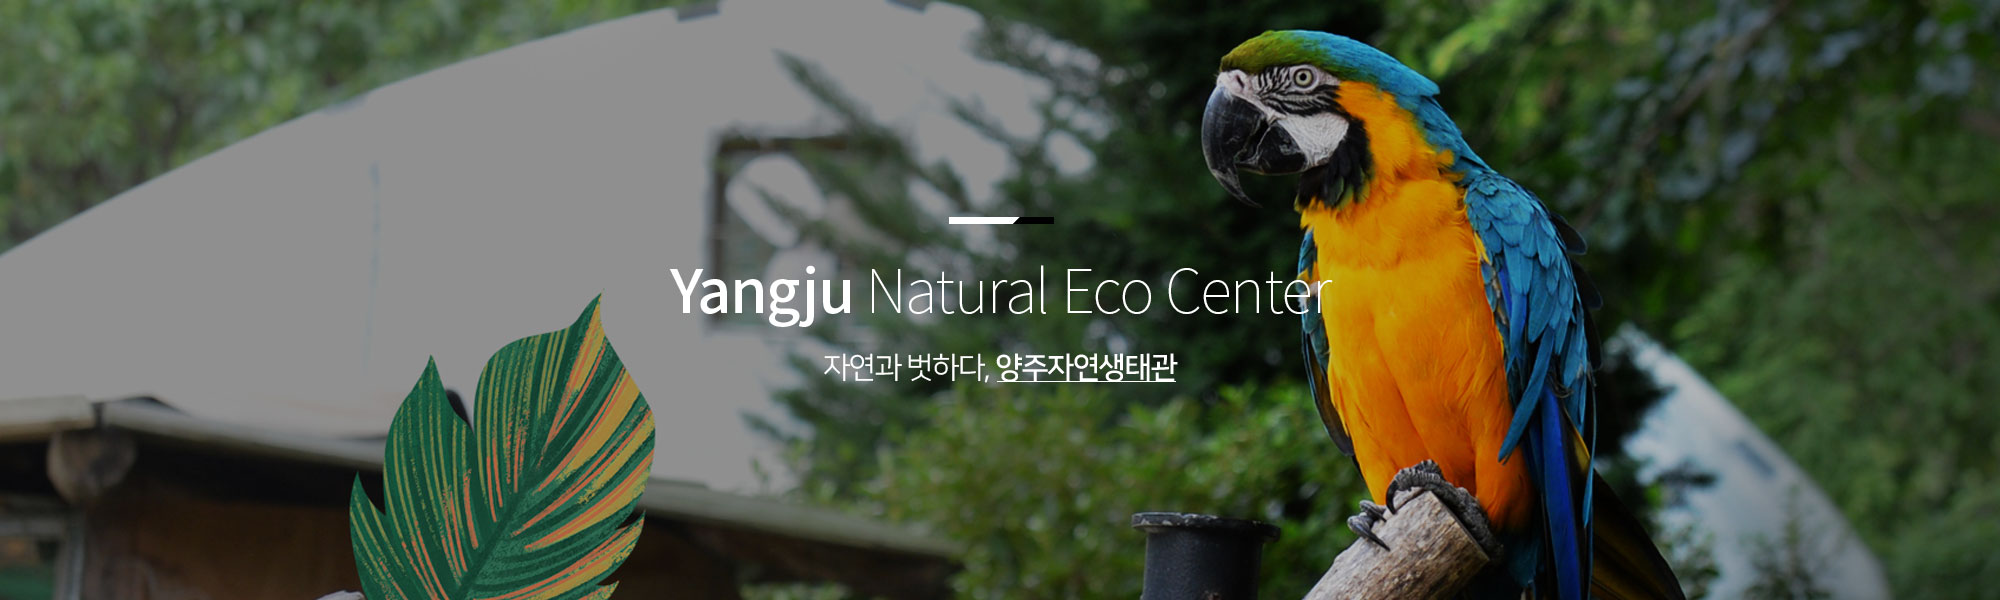 Yangju Natural Eco Center 자연과 벗하다, 양주자연생태관